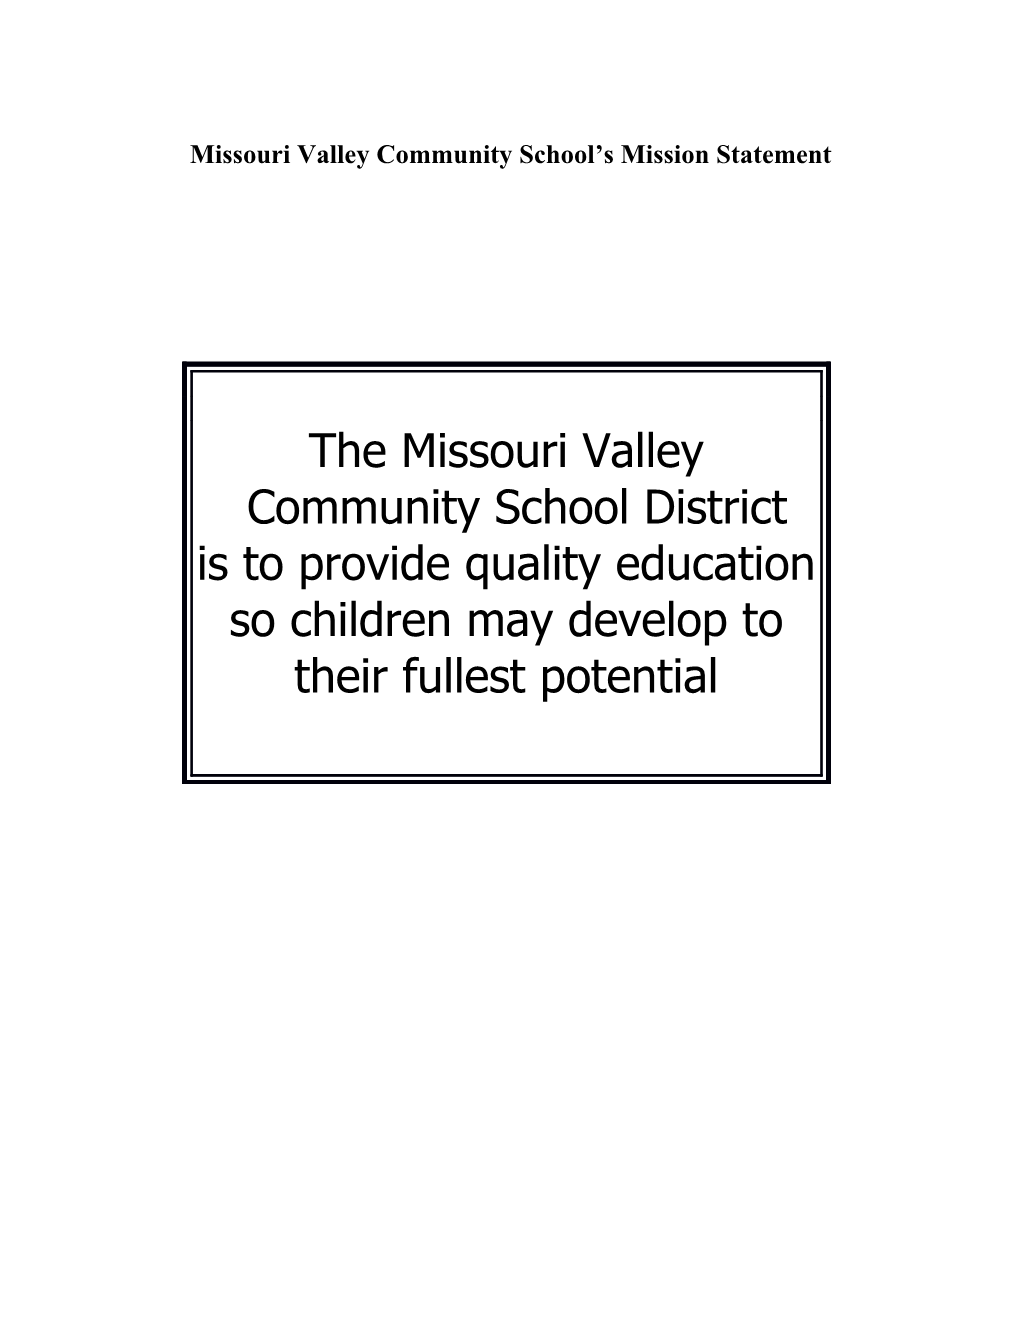 The Missouri Valley Community School District